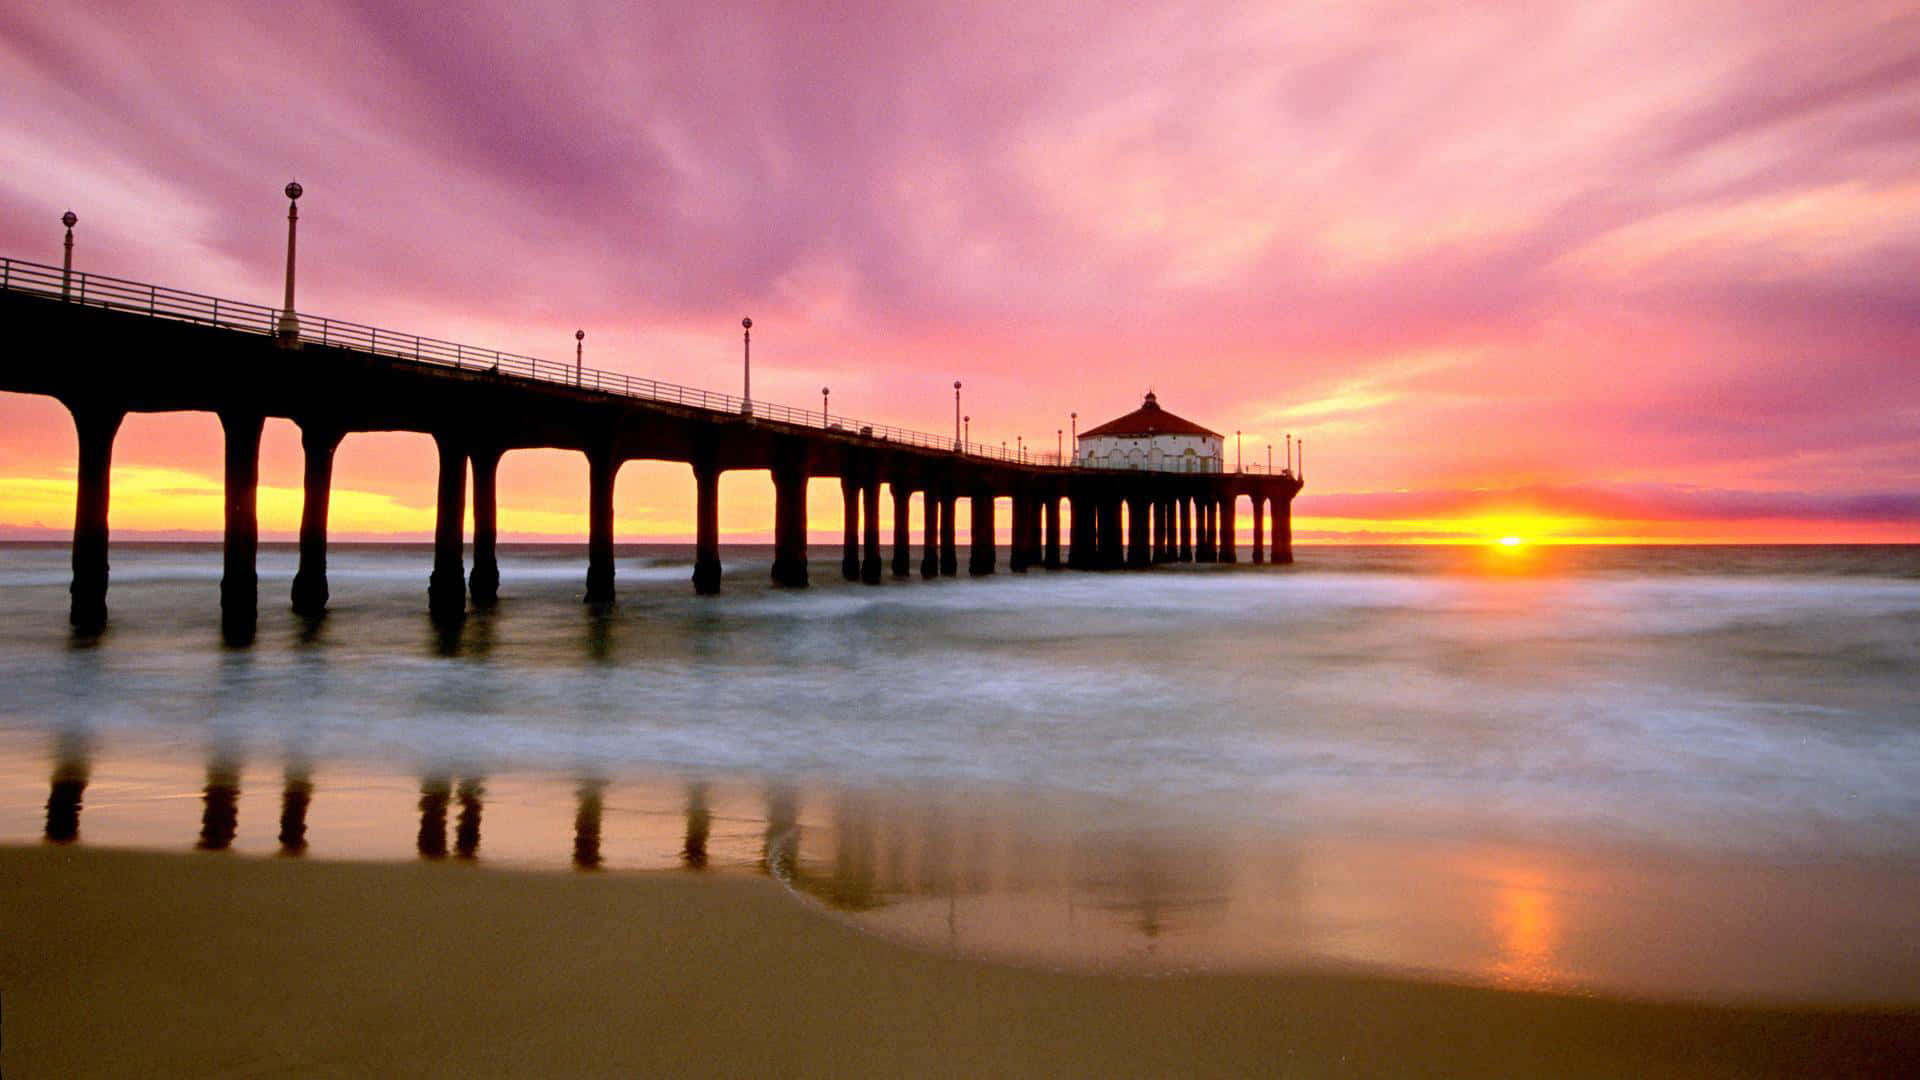 A beautiful sunset view of a beach in Newport Beach, California.